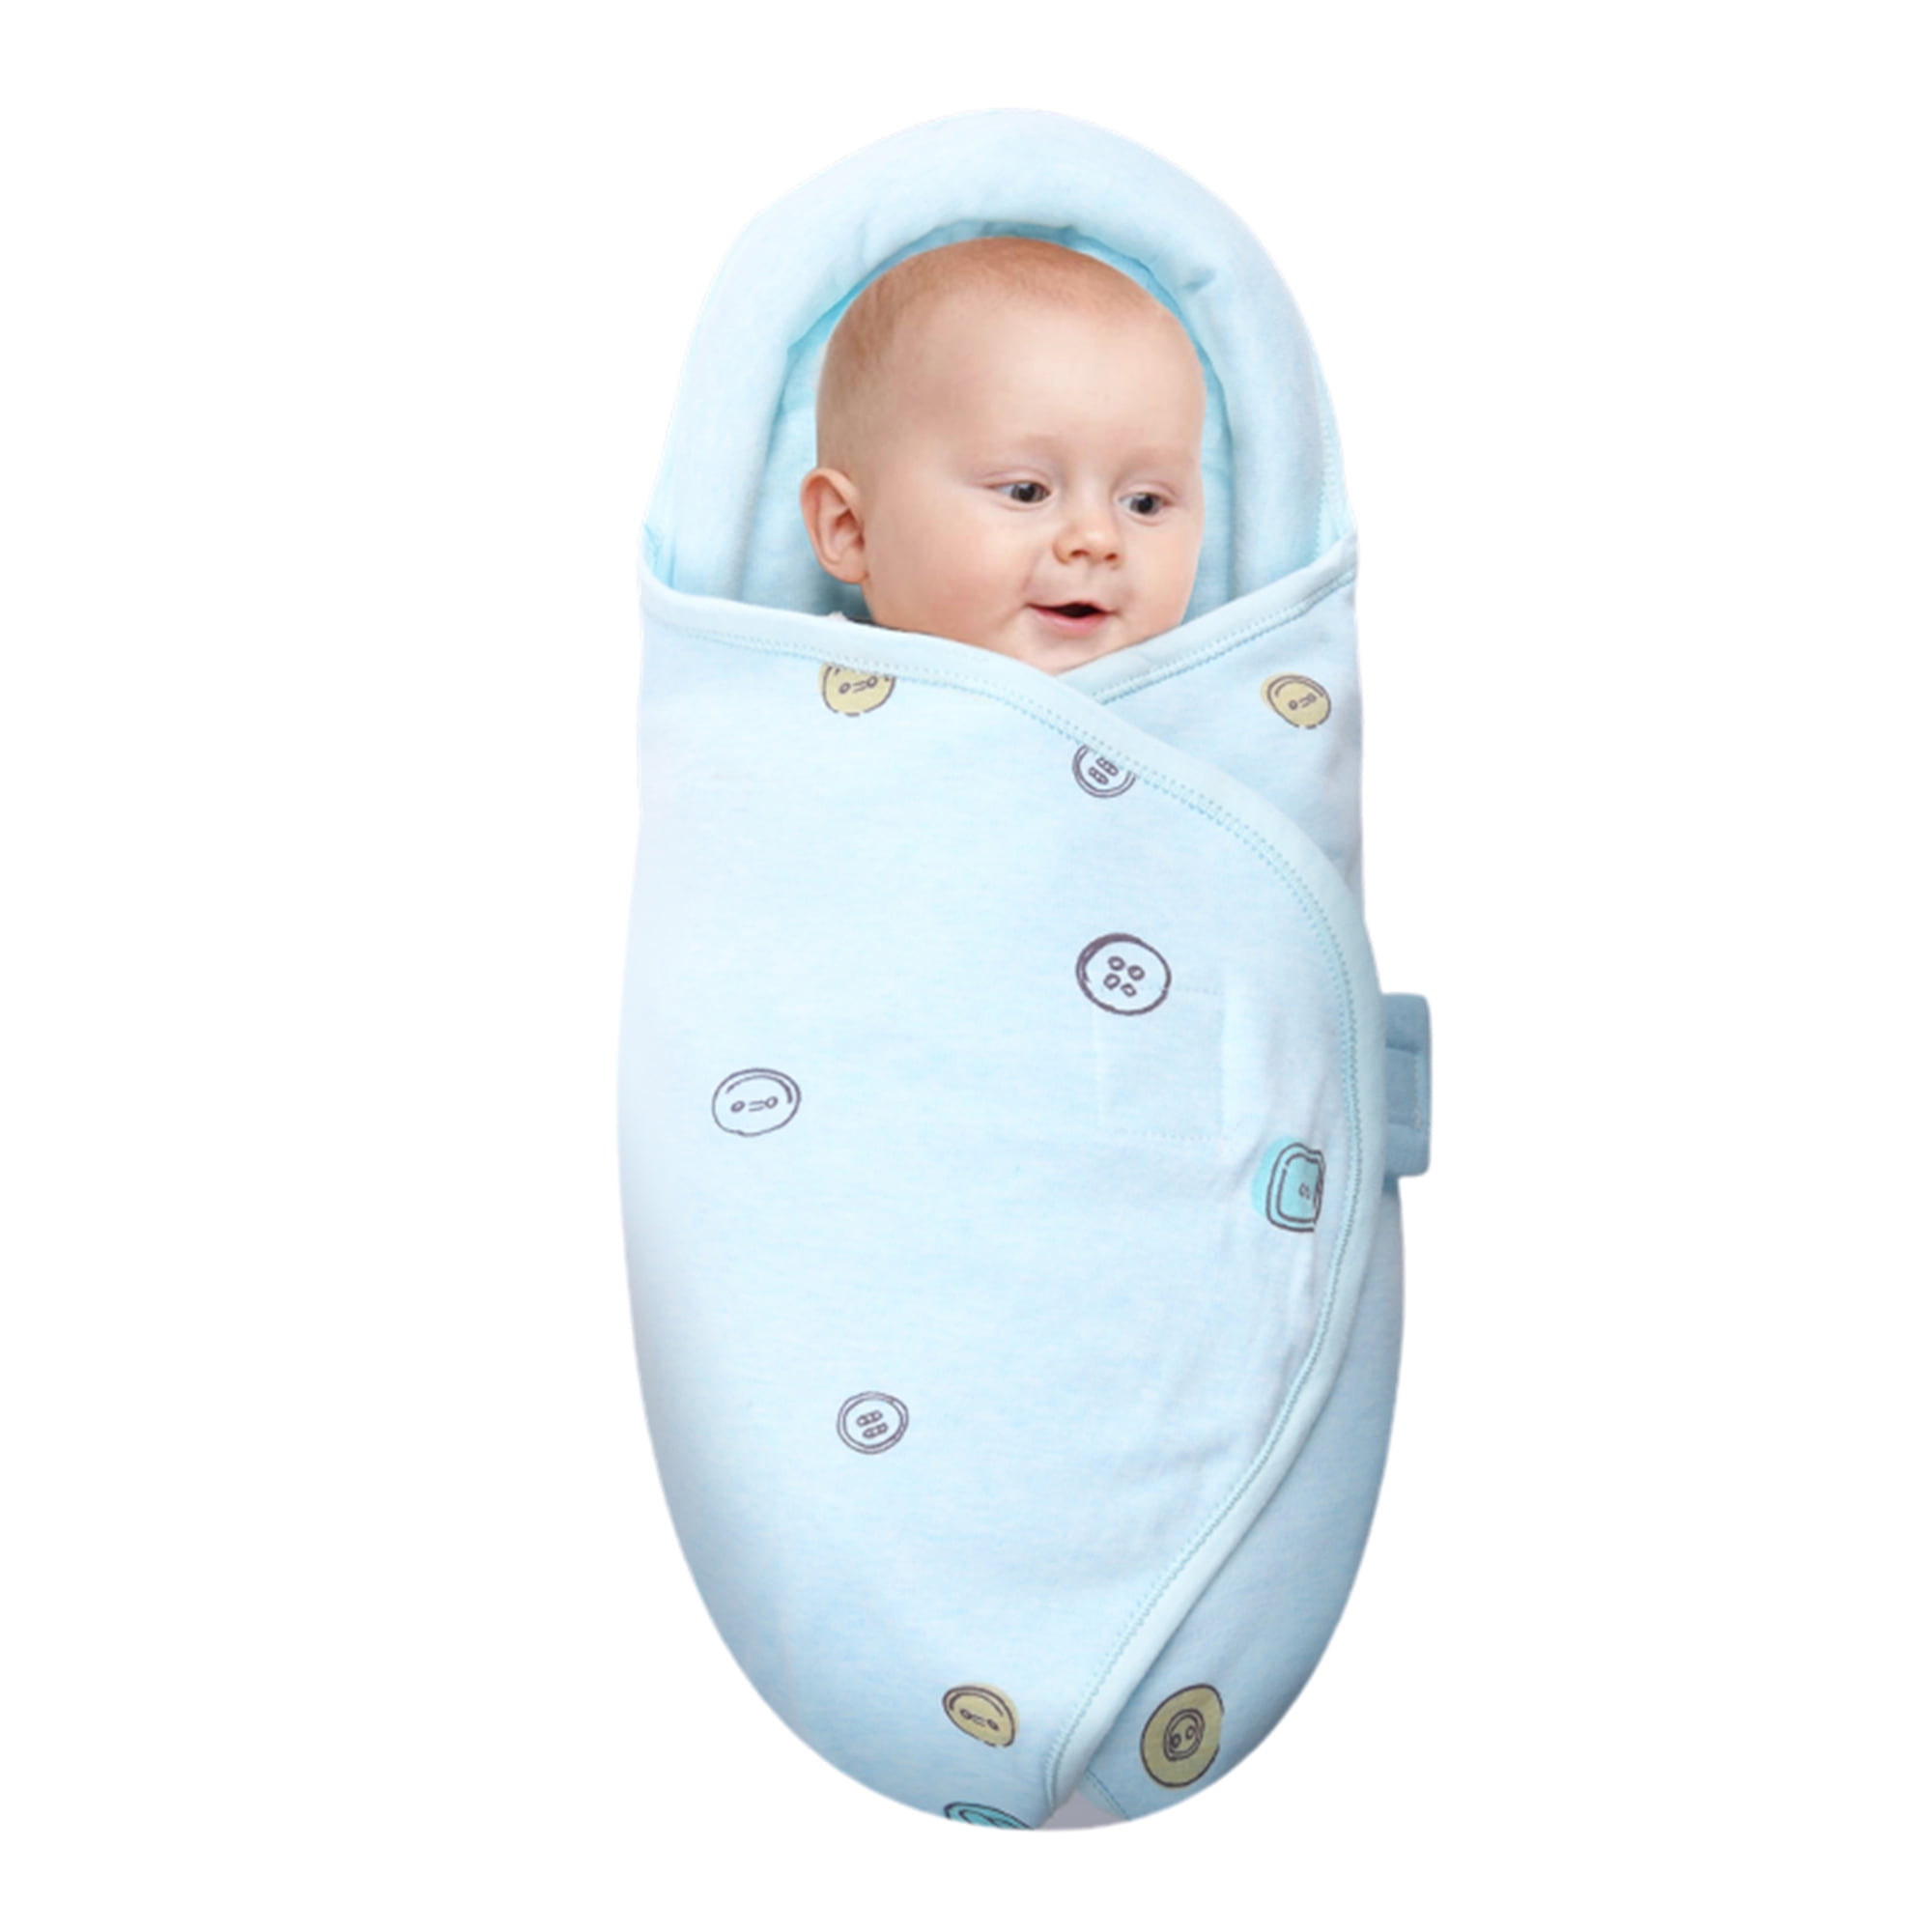 Newborn Cotton Swaddle Wrap Toddler Winter Warm Sleeping Bags Baby Sleepsack-2 GROOMY Baby Blanket 